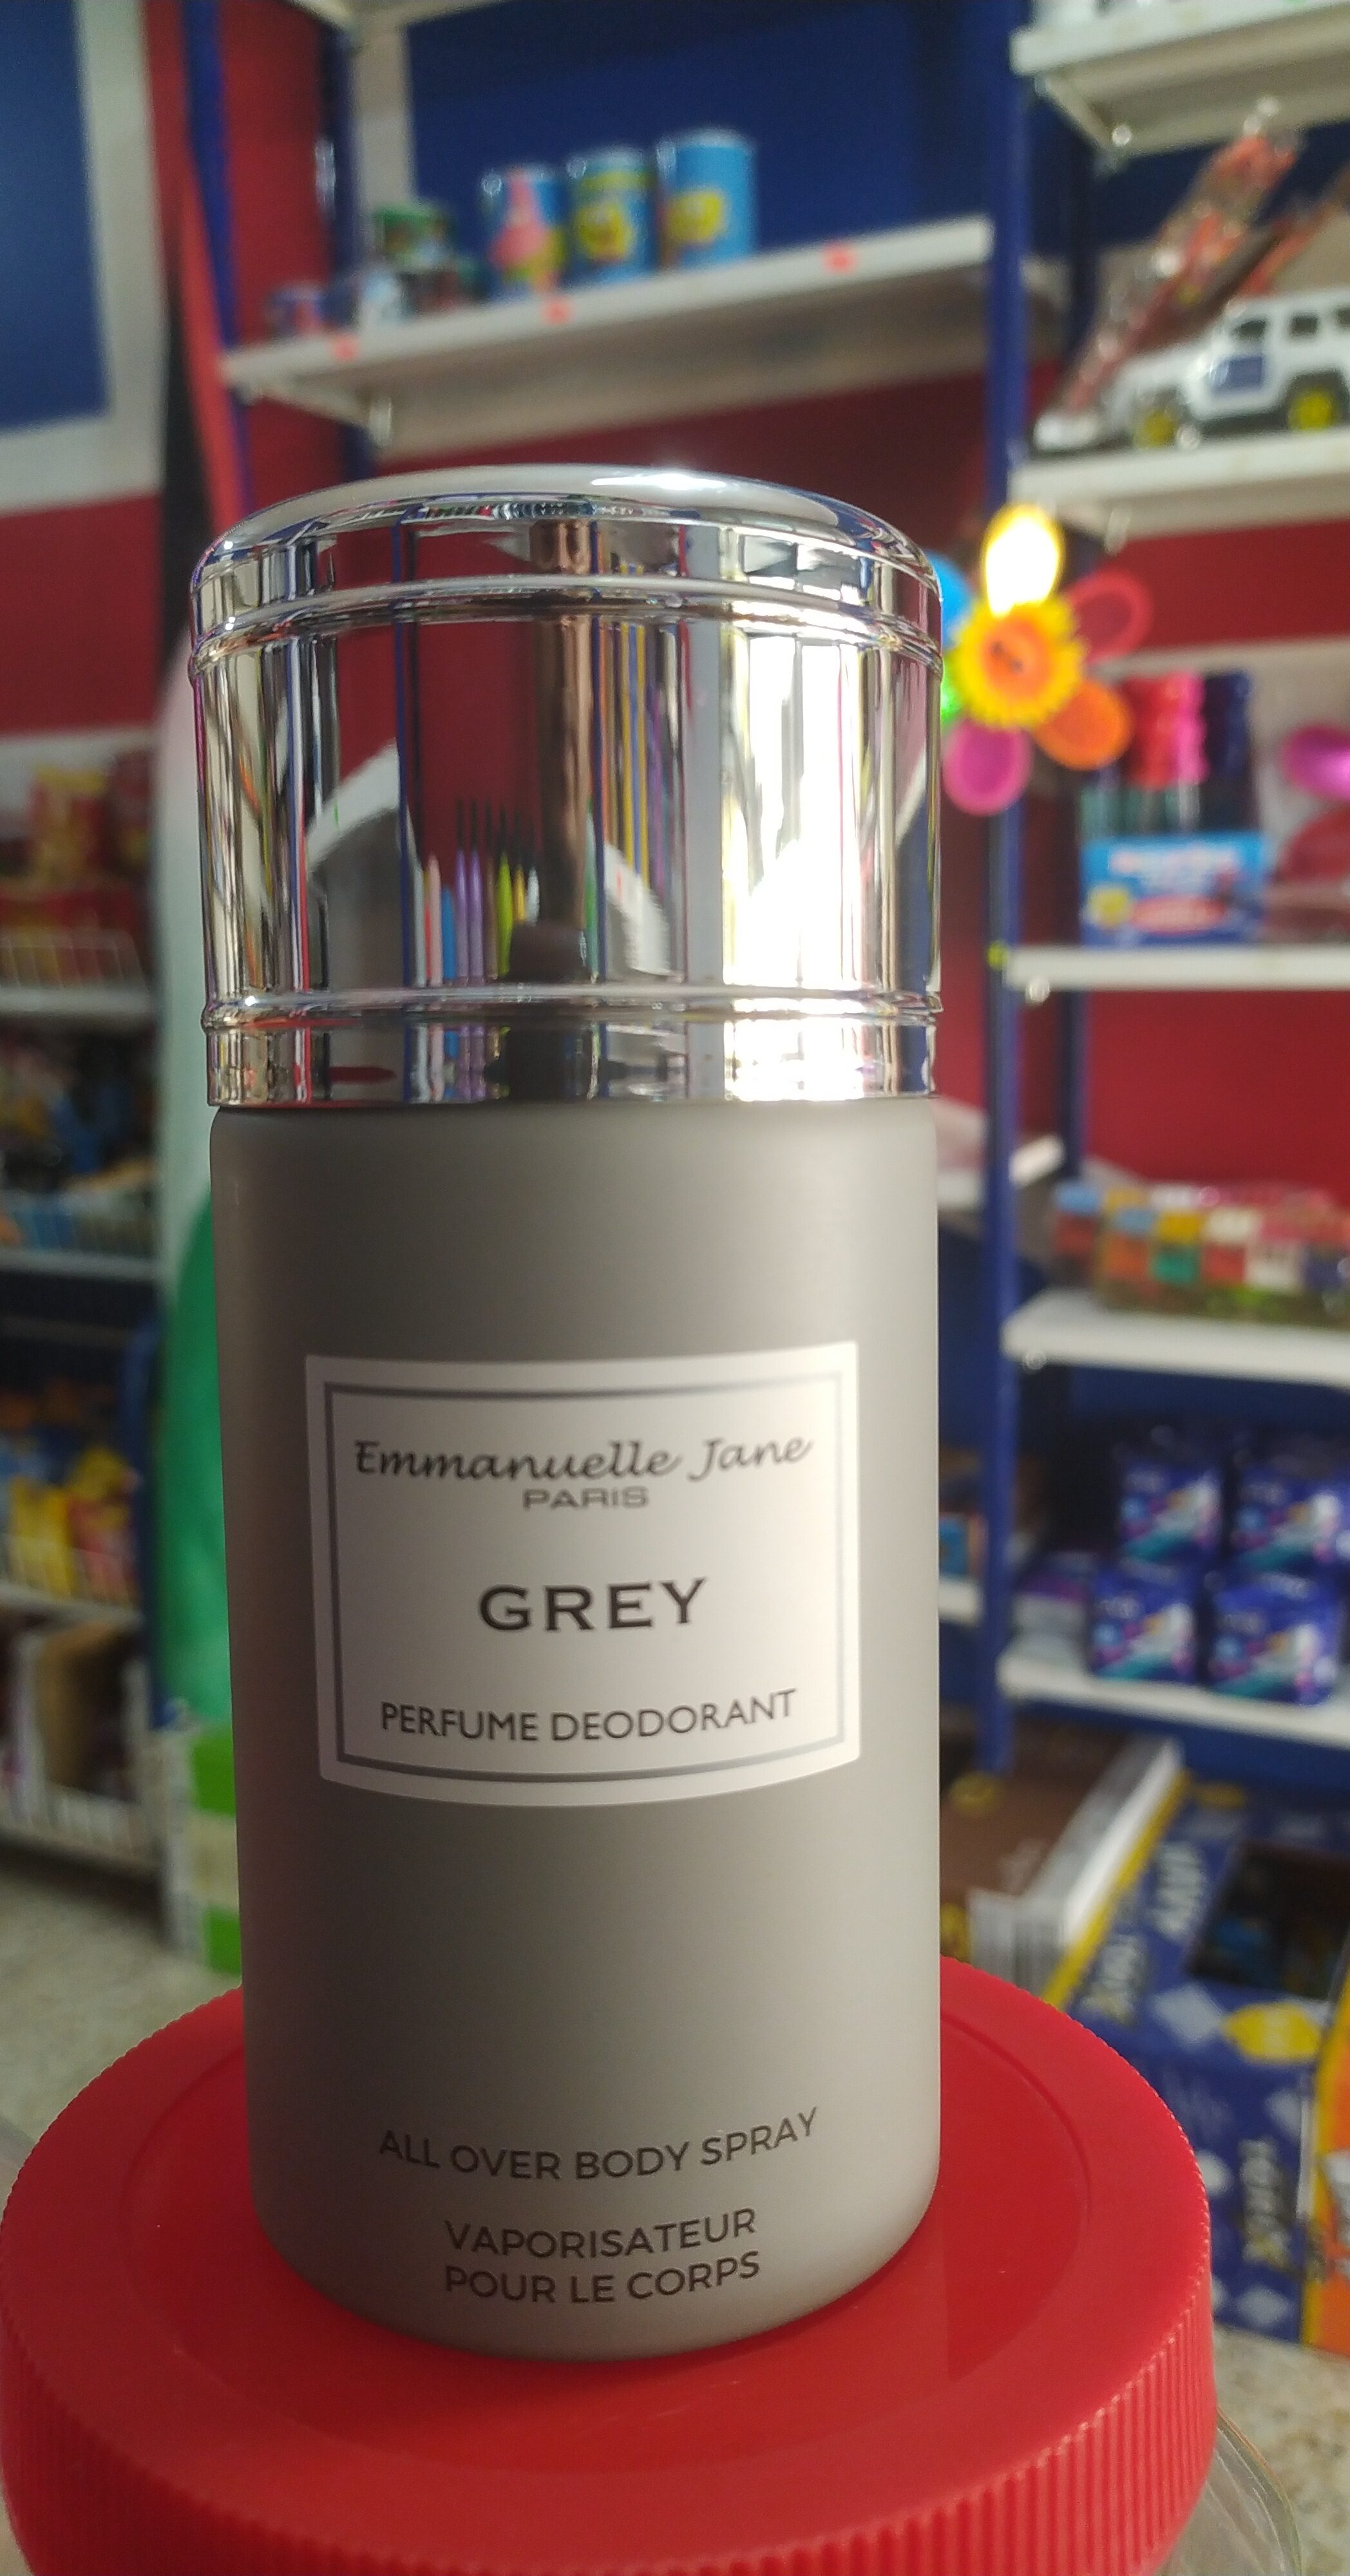 Emmanuel jane grey - Product - en